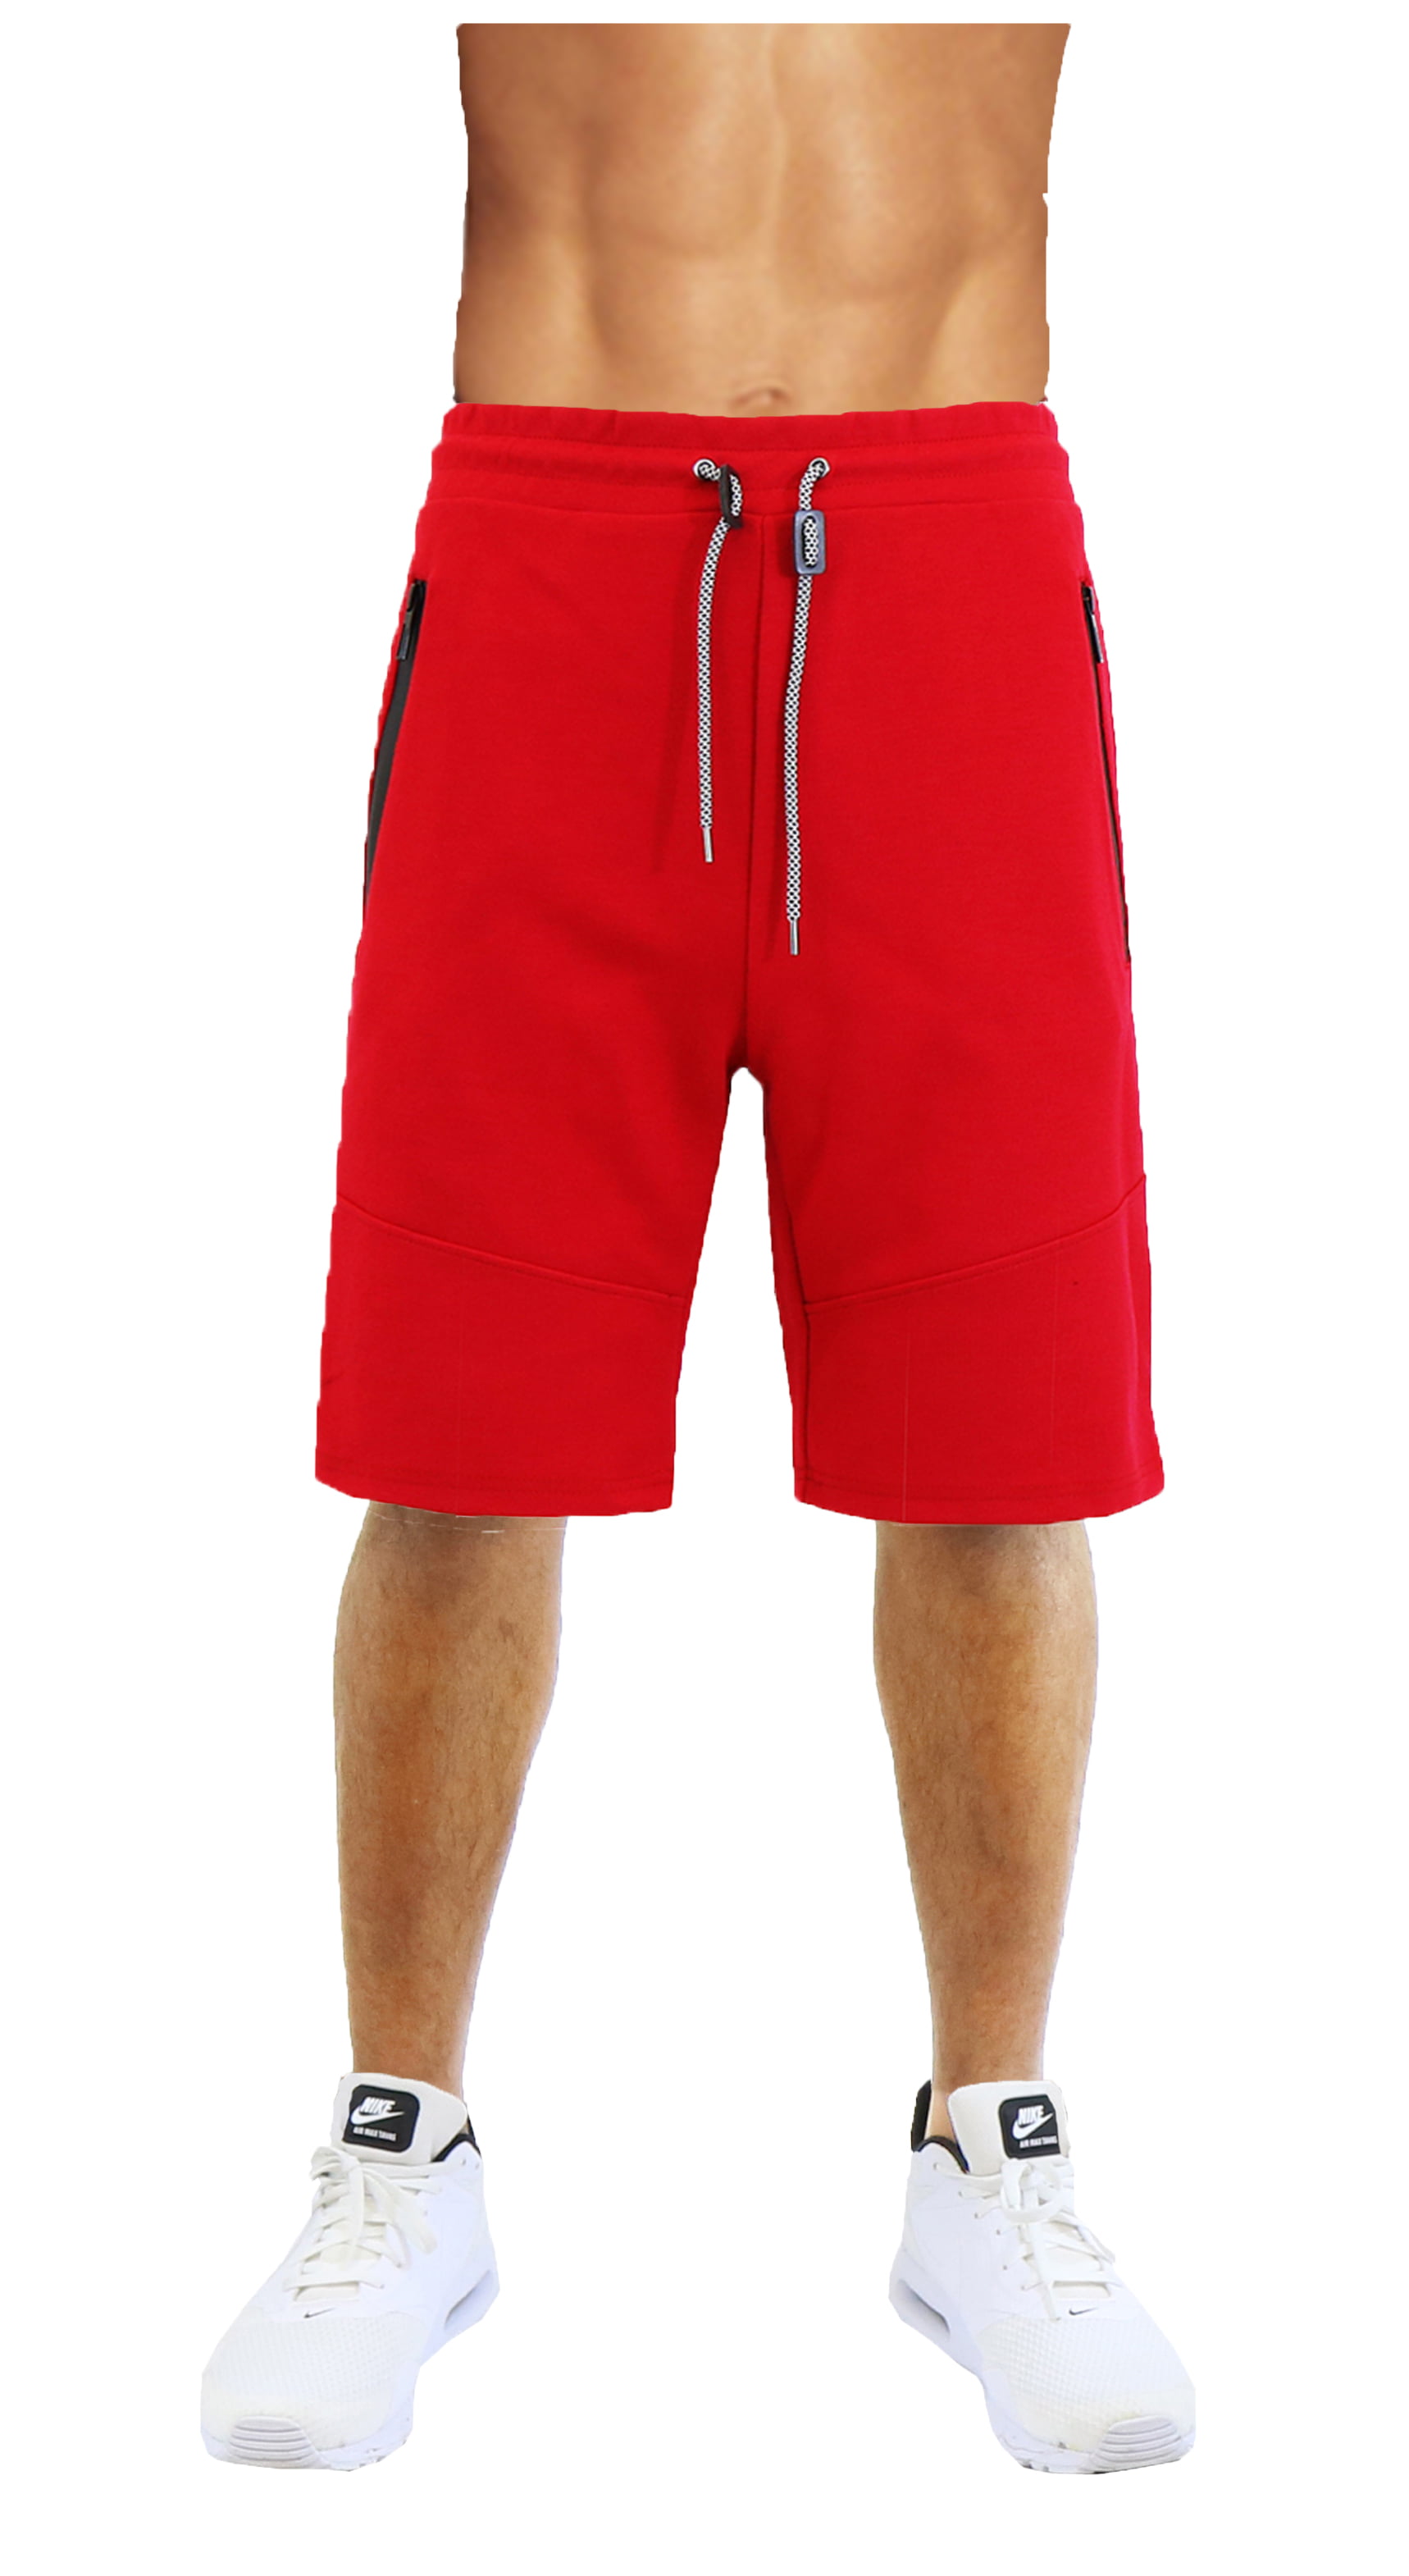 Mens Tech Shorts With Side Zipper Pockets - Walmart.com